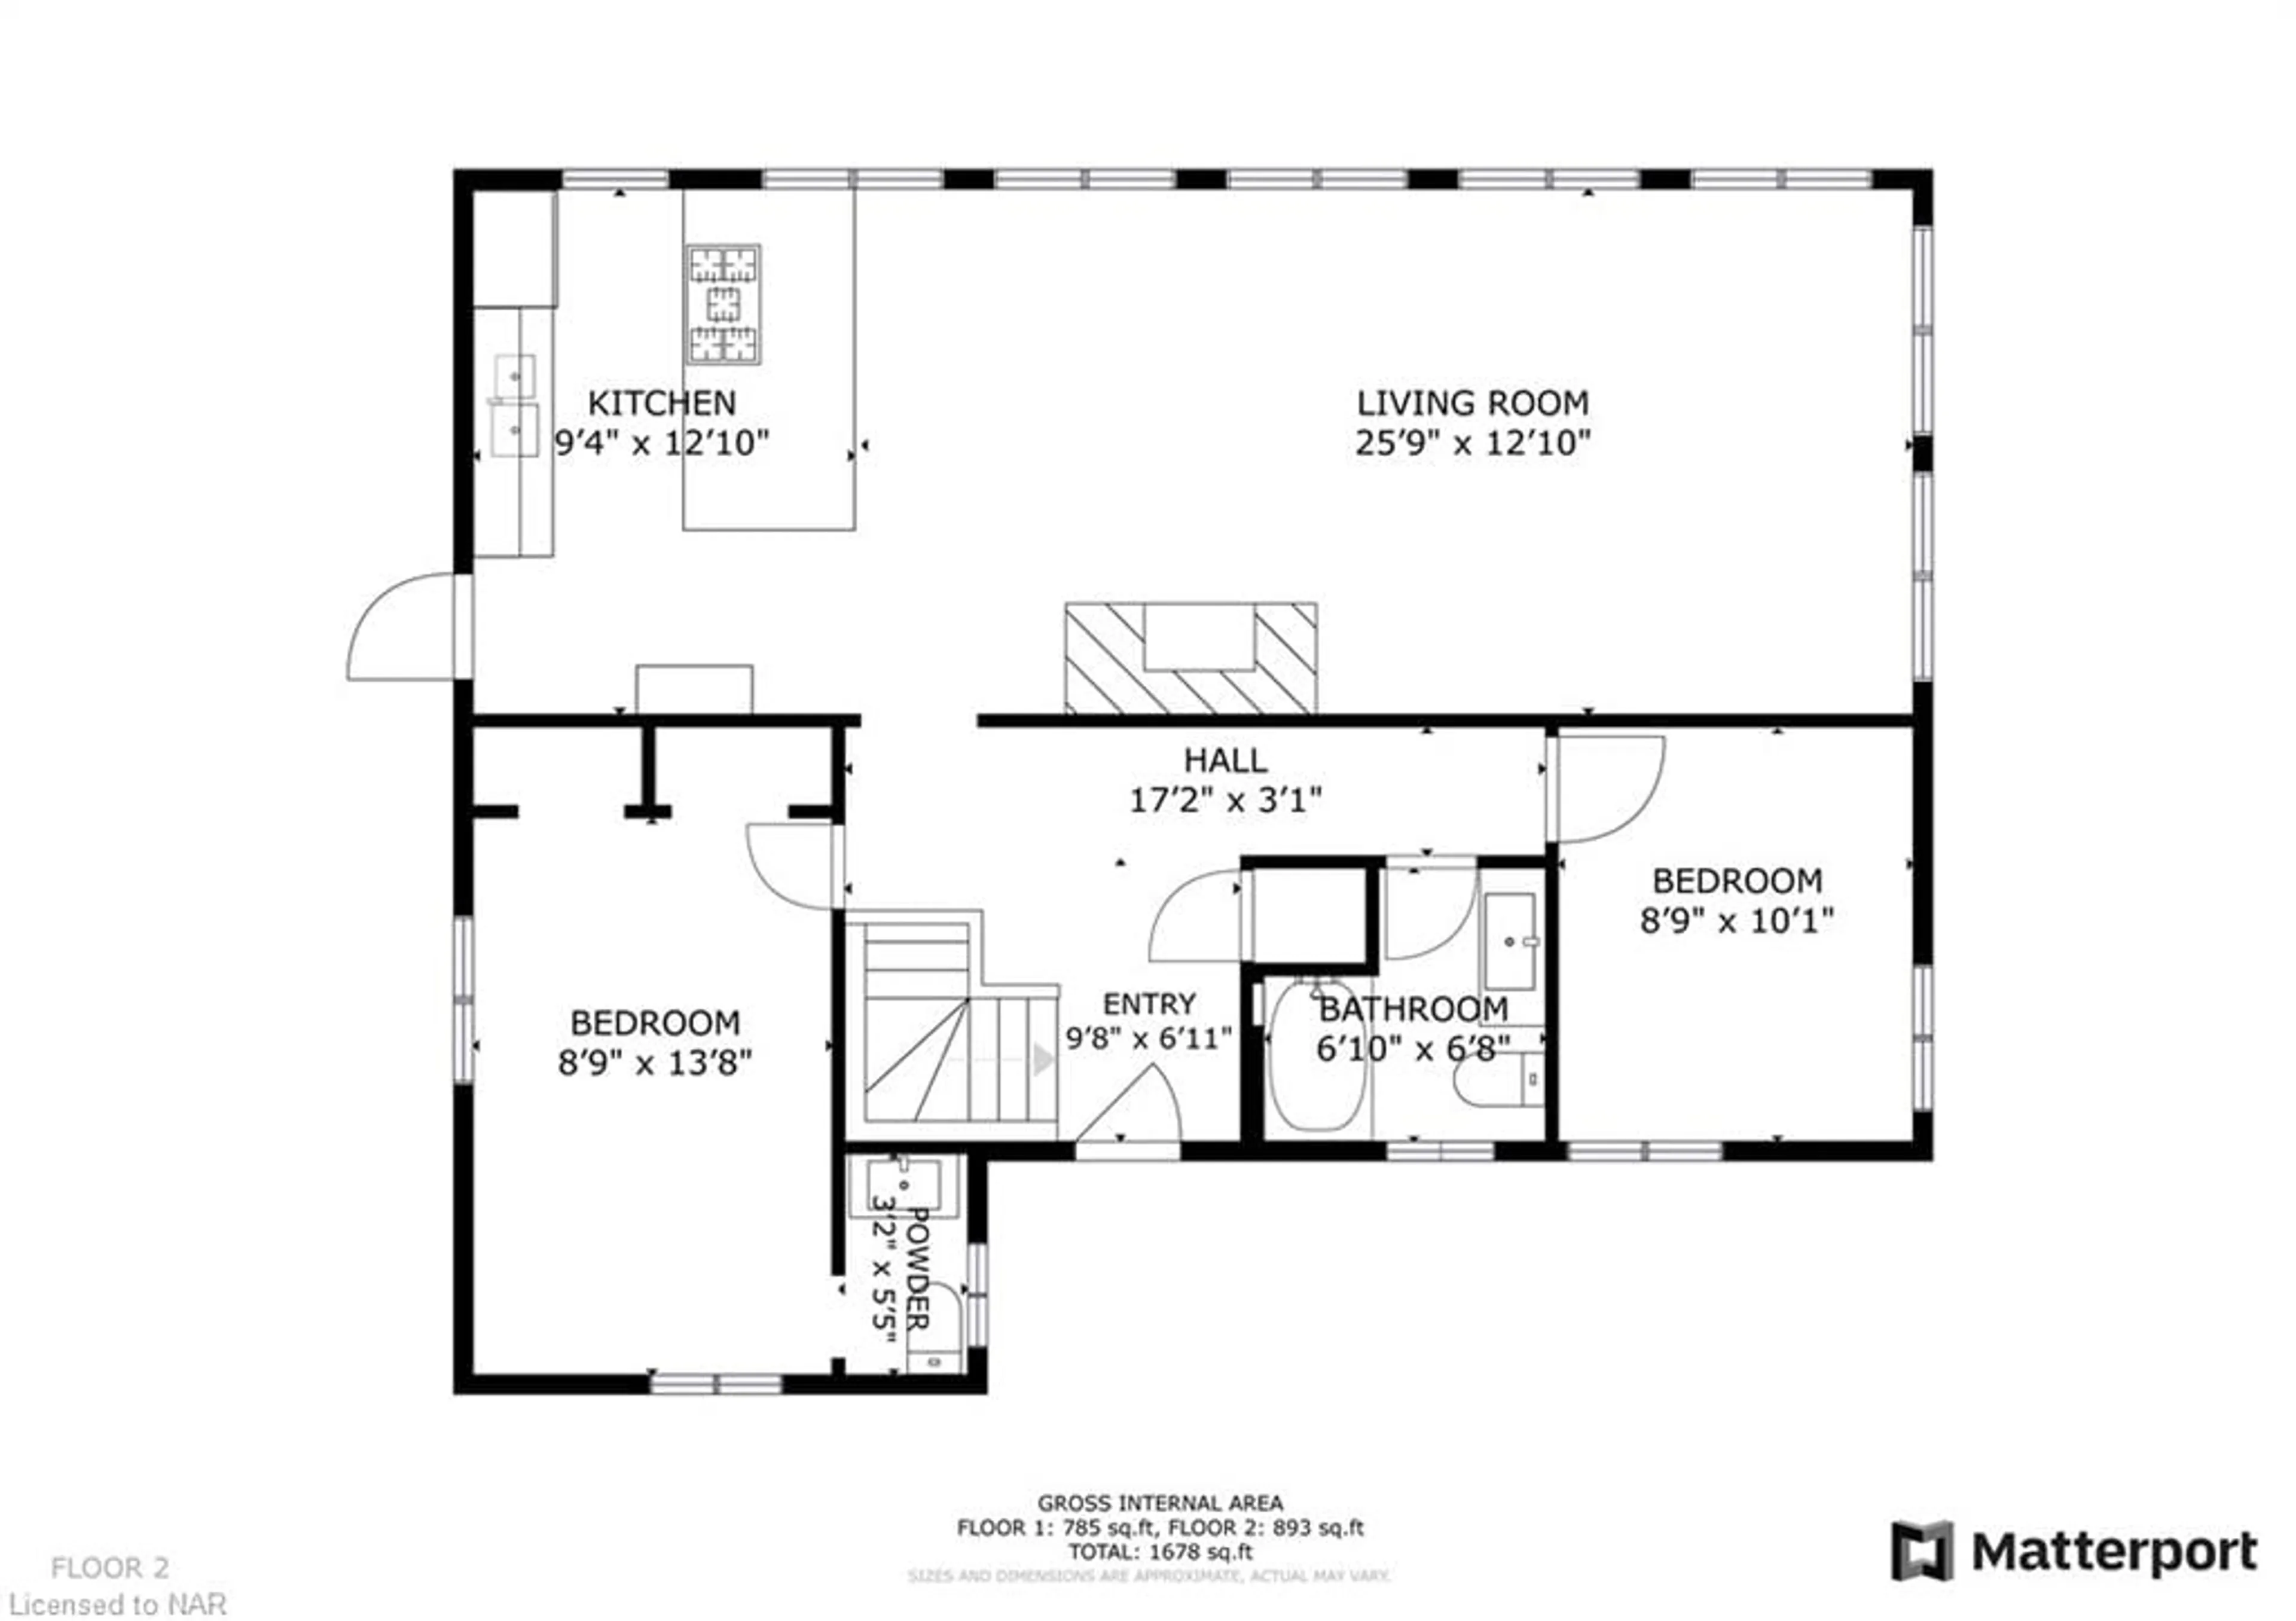 Floor plan for 10245 Camelot Dr, Wainfleet Ontario L3K 5V4